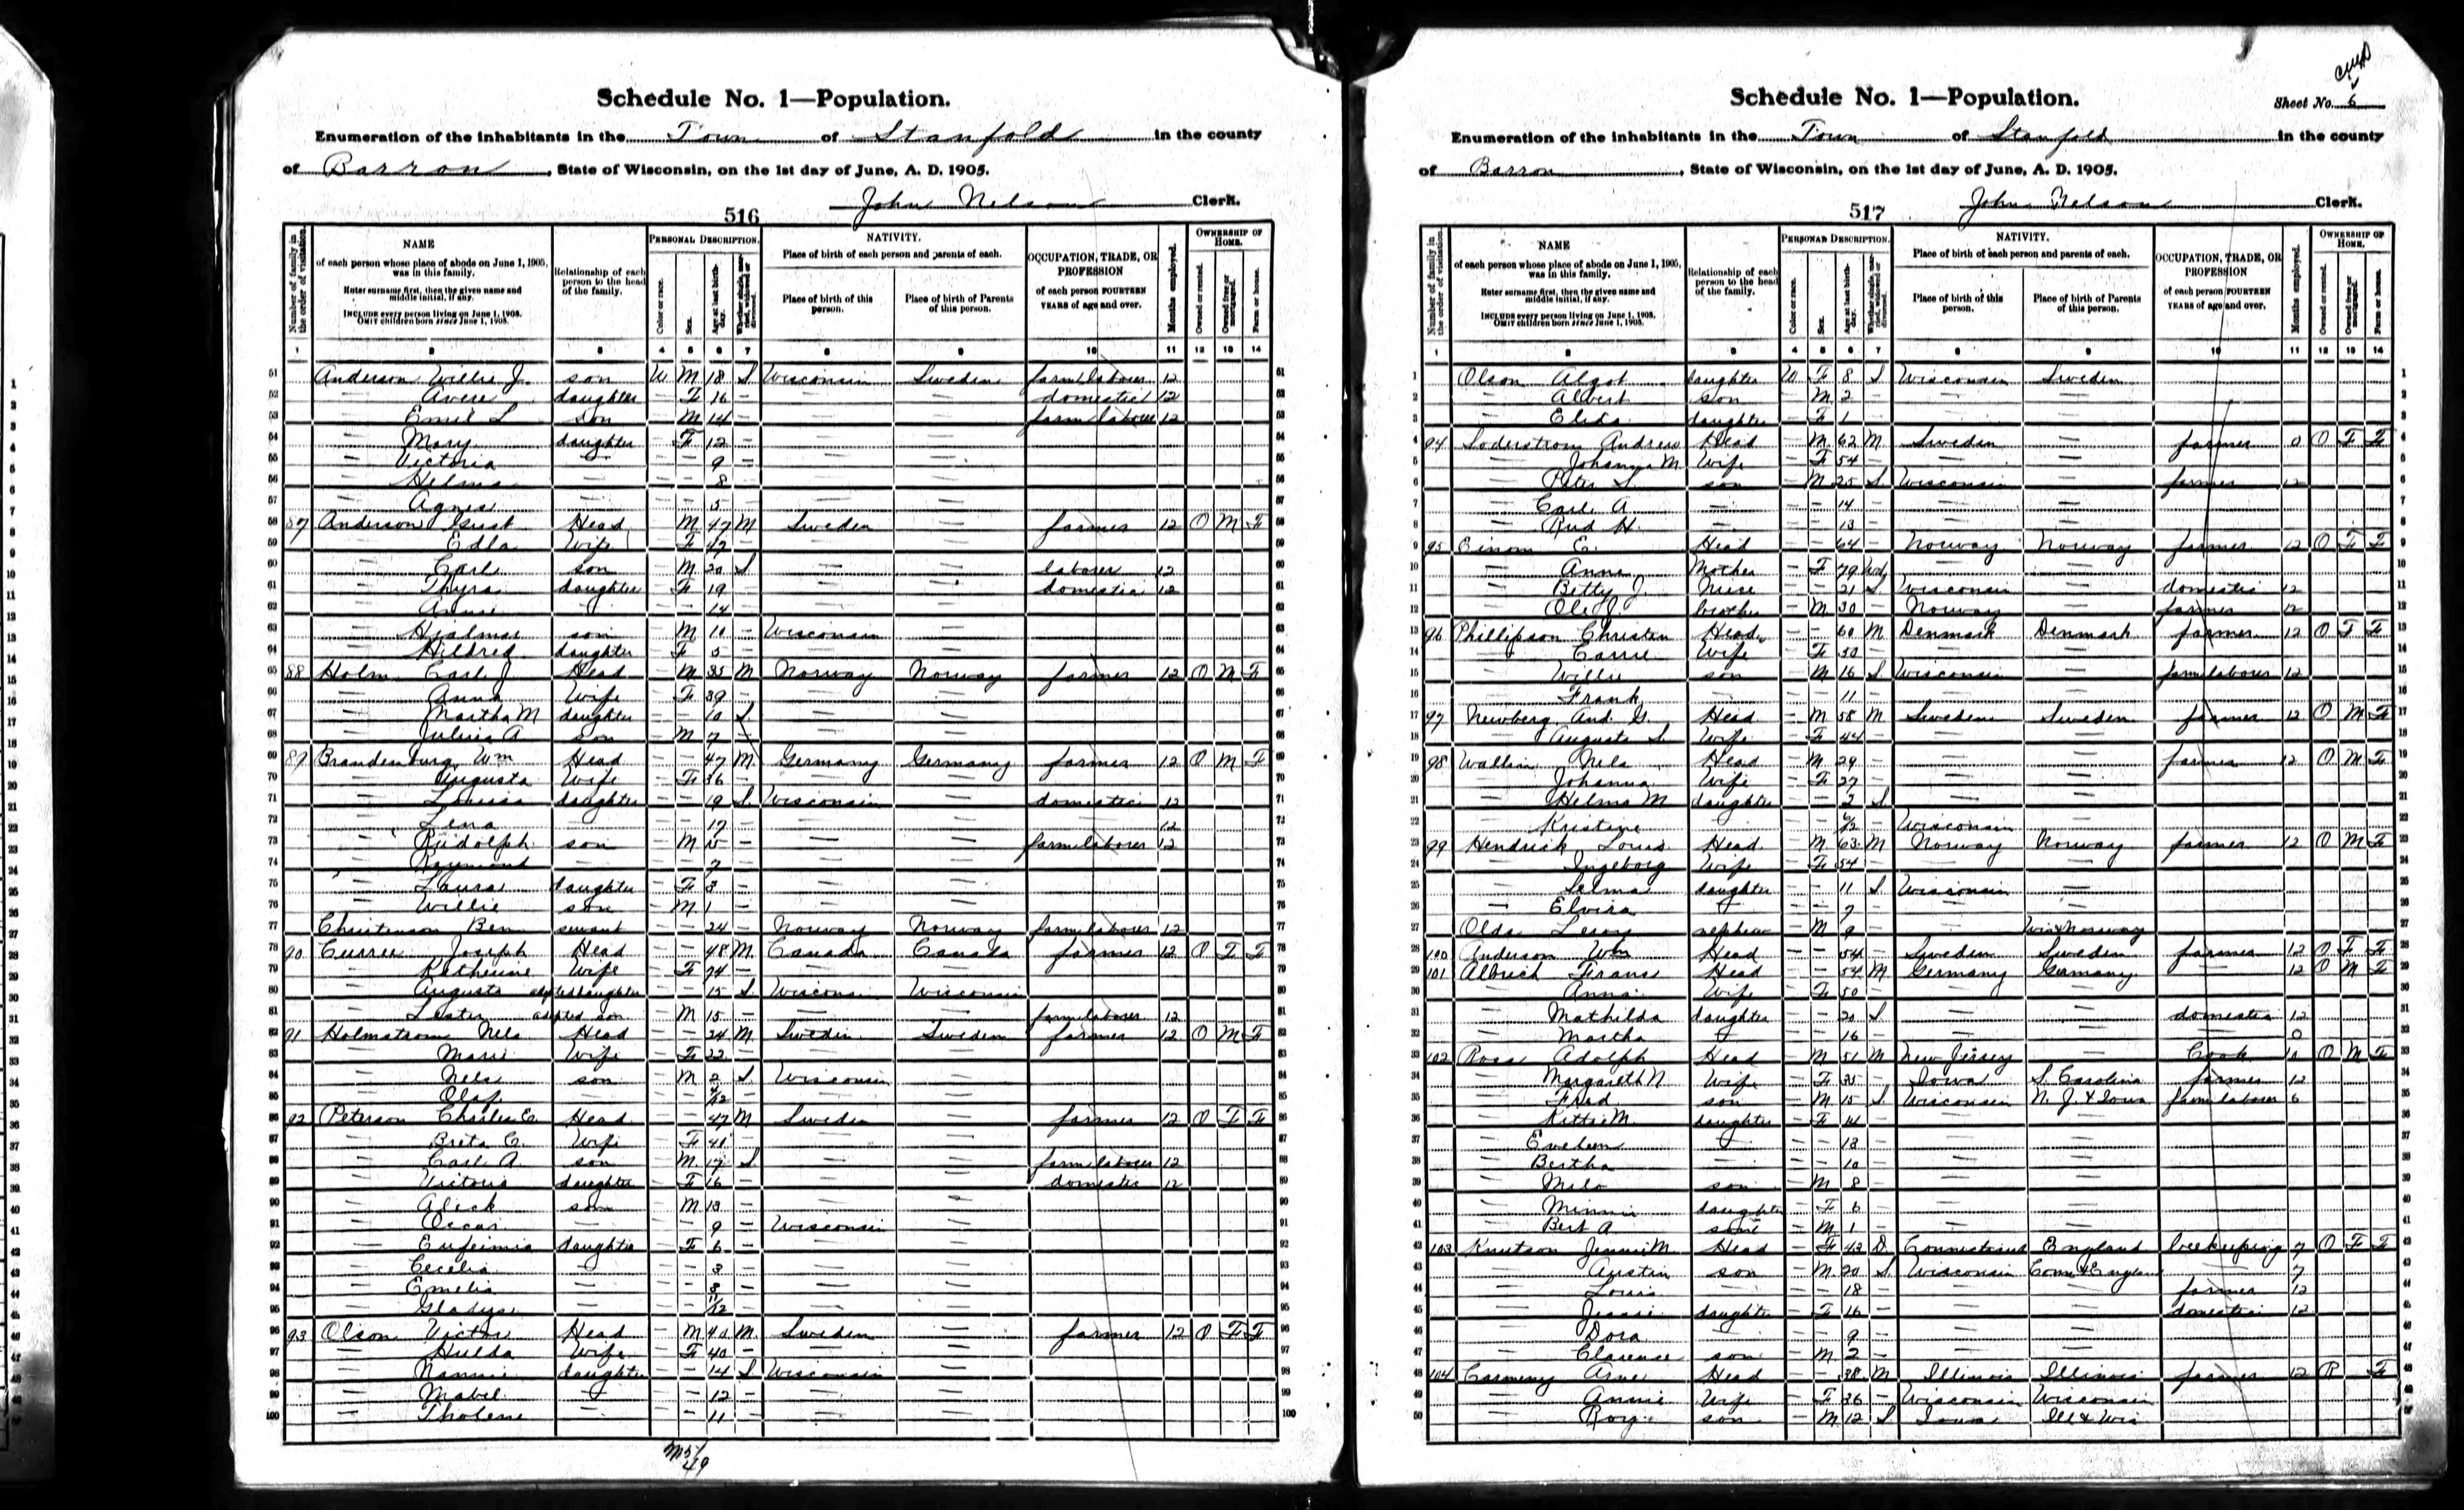 1905 Jennie Knutson Census